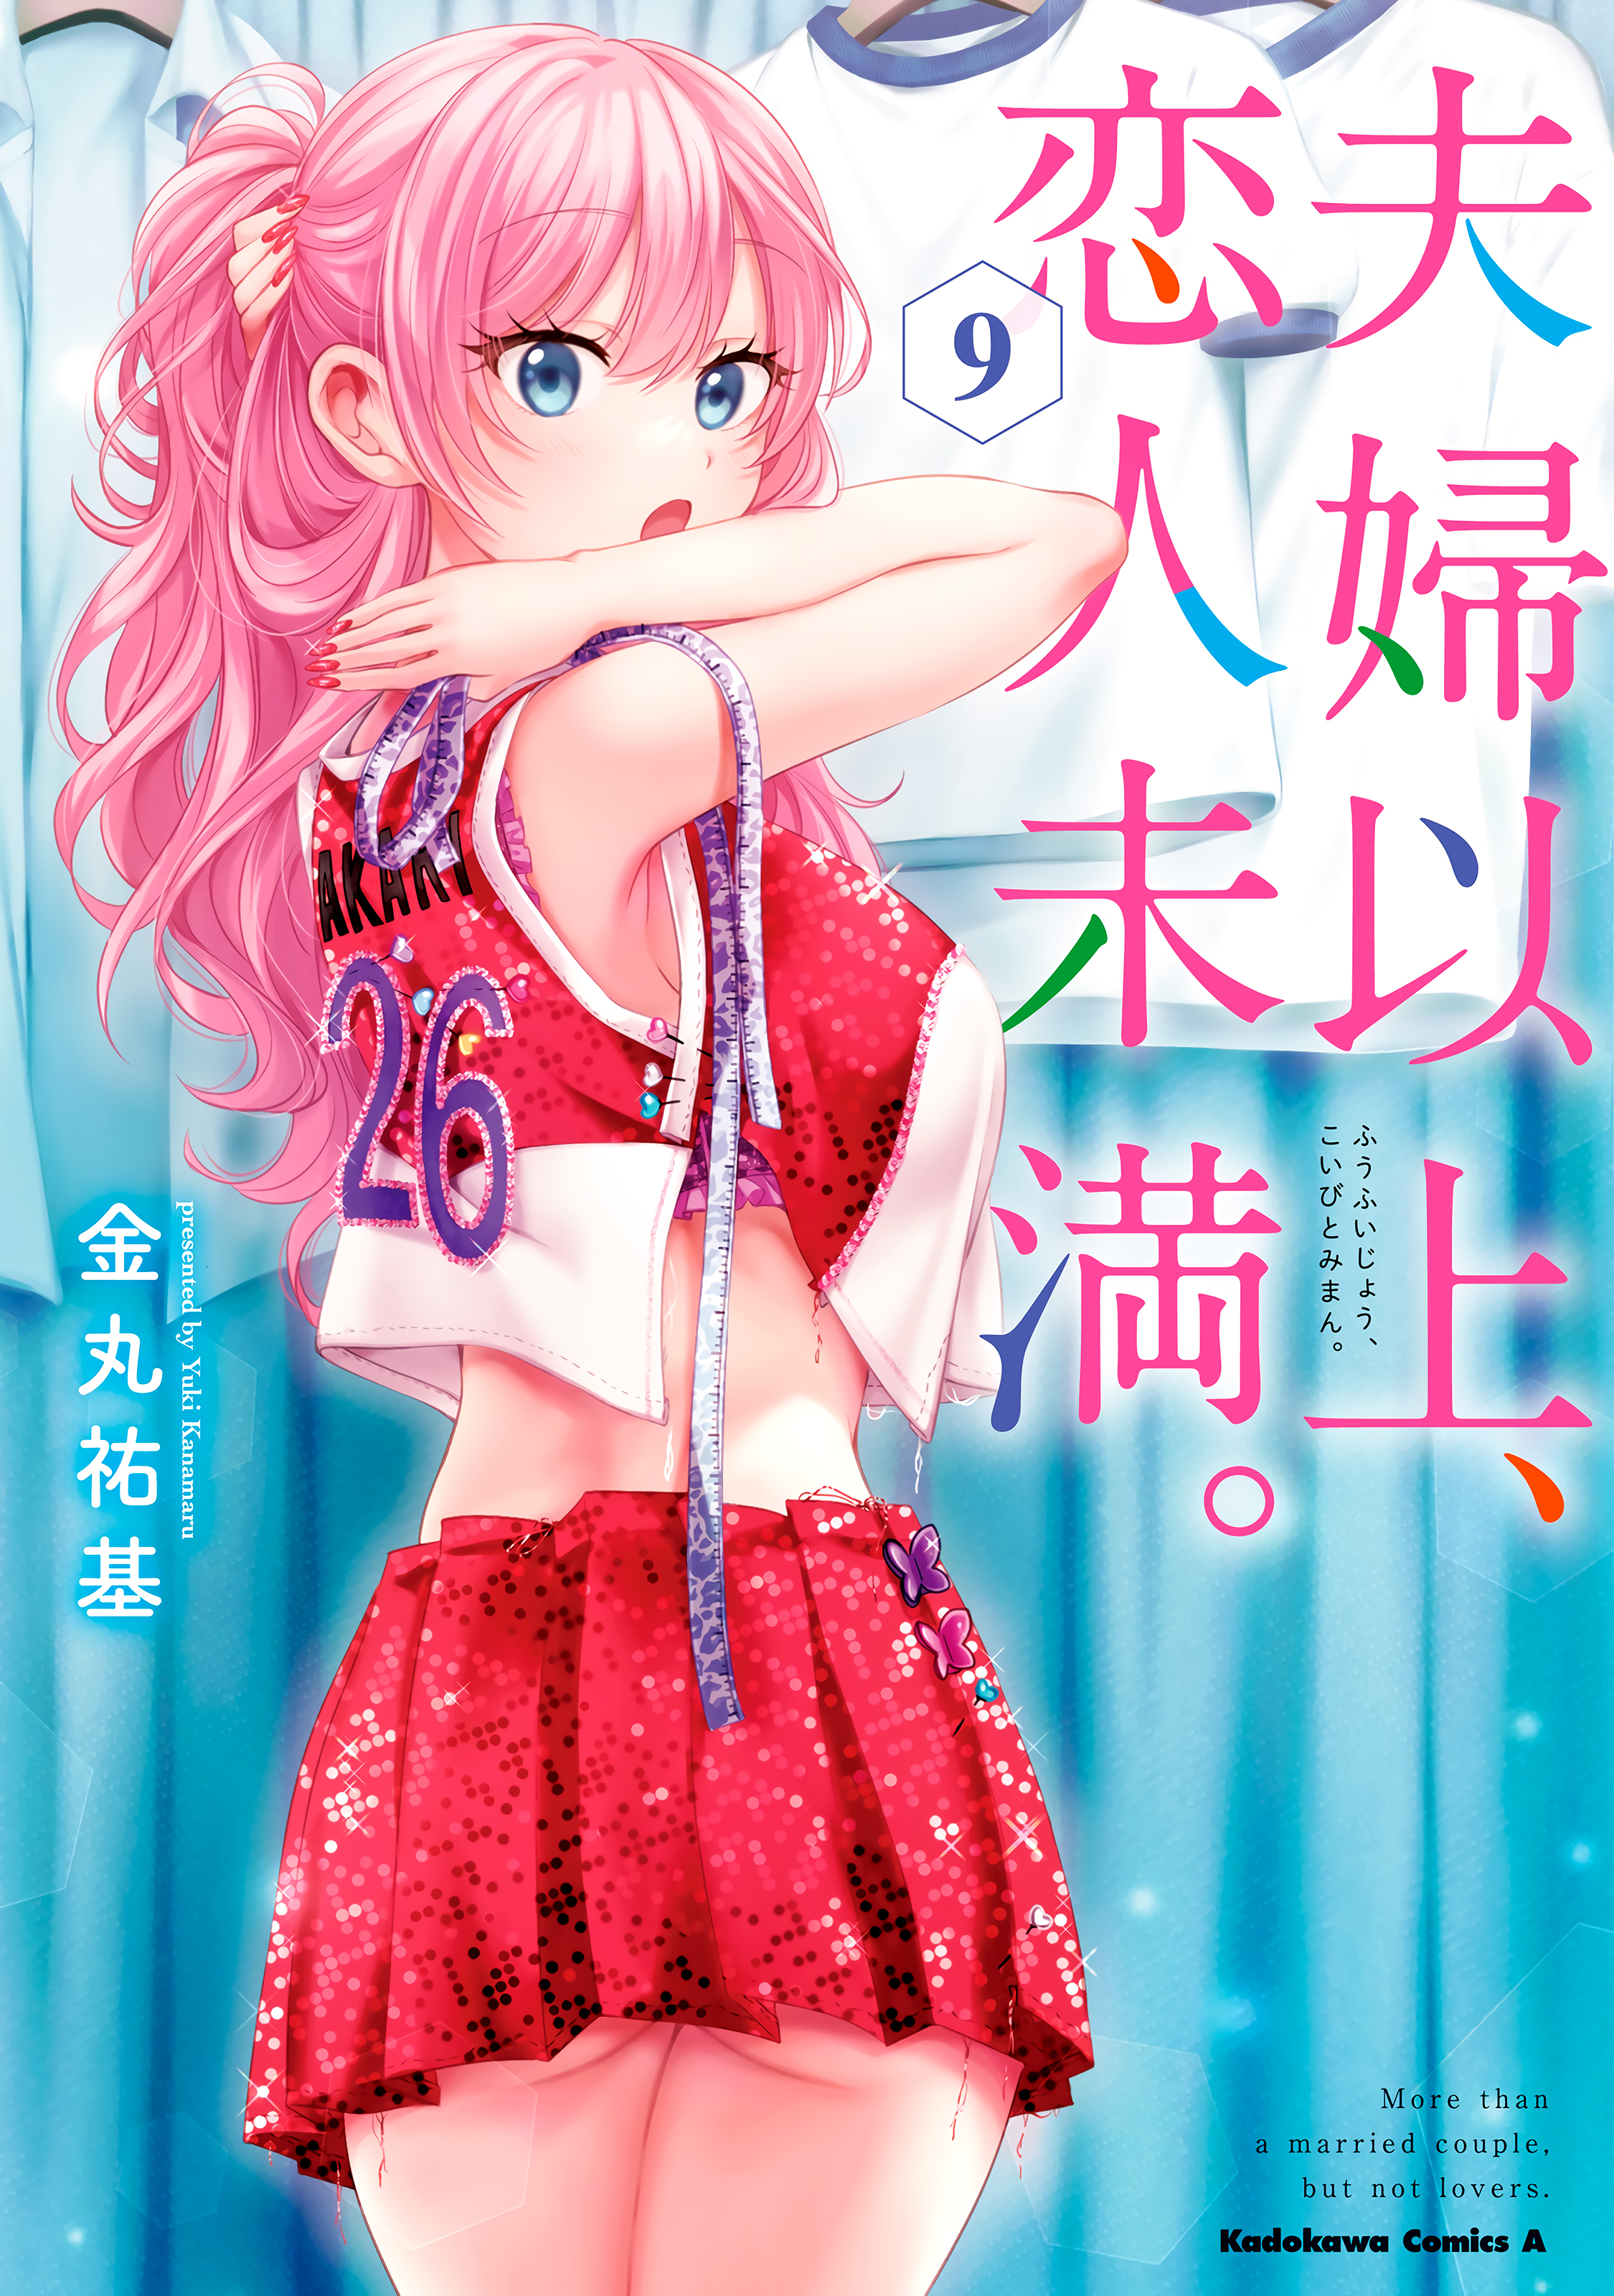 Le manga Fuufu Ijou, Koibito Miman. adapté en anime